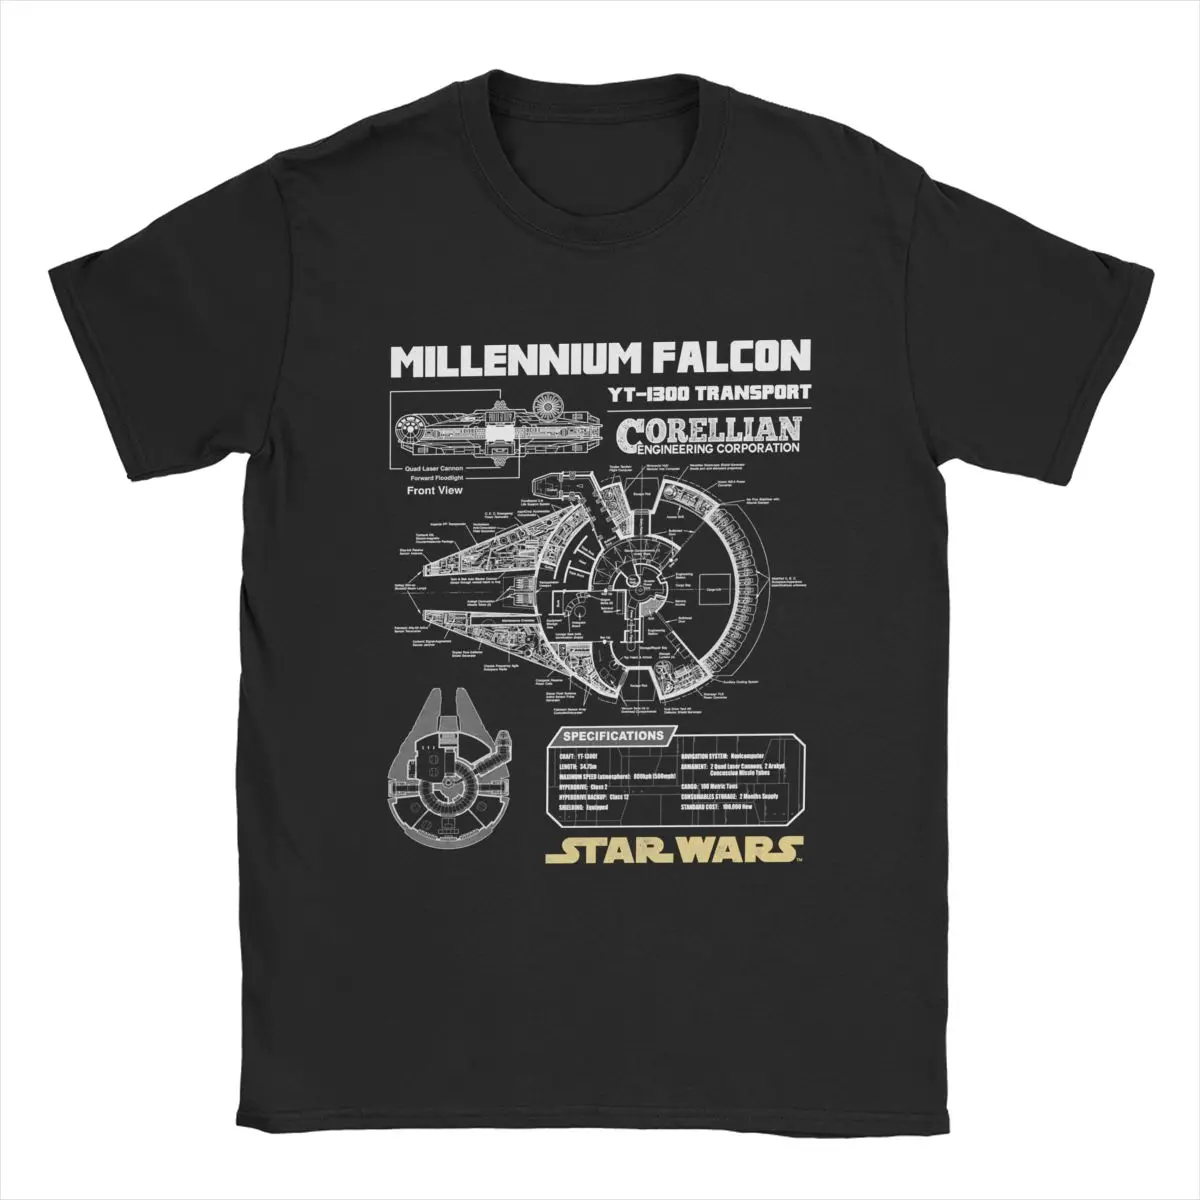 

Disney Stars Wars Millennium Falcon Schematics T-Shirts Men Pure Cotton Tees Crew Neck Short Sleeve T Shirt Gift Idea Clothes